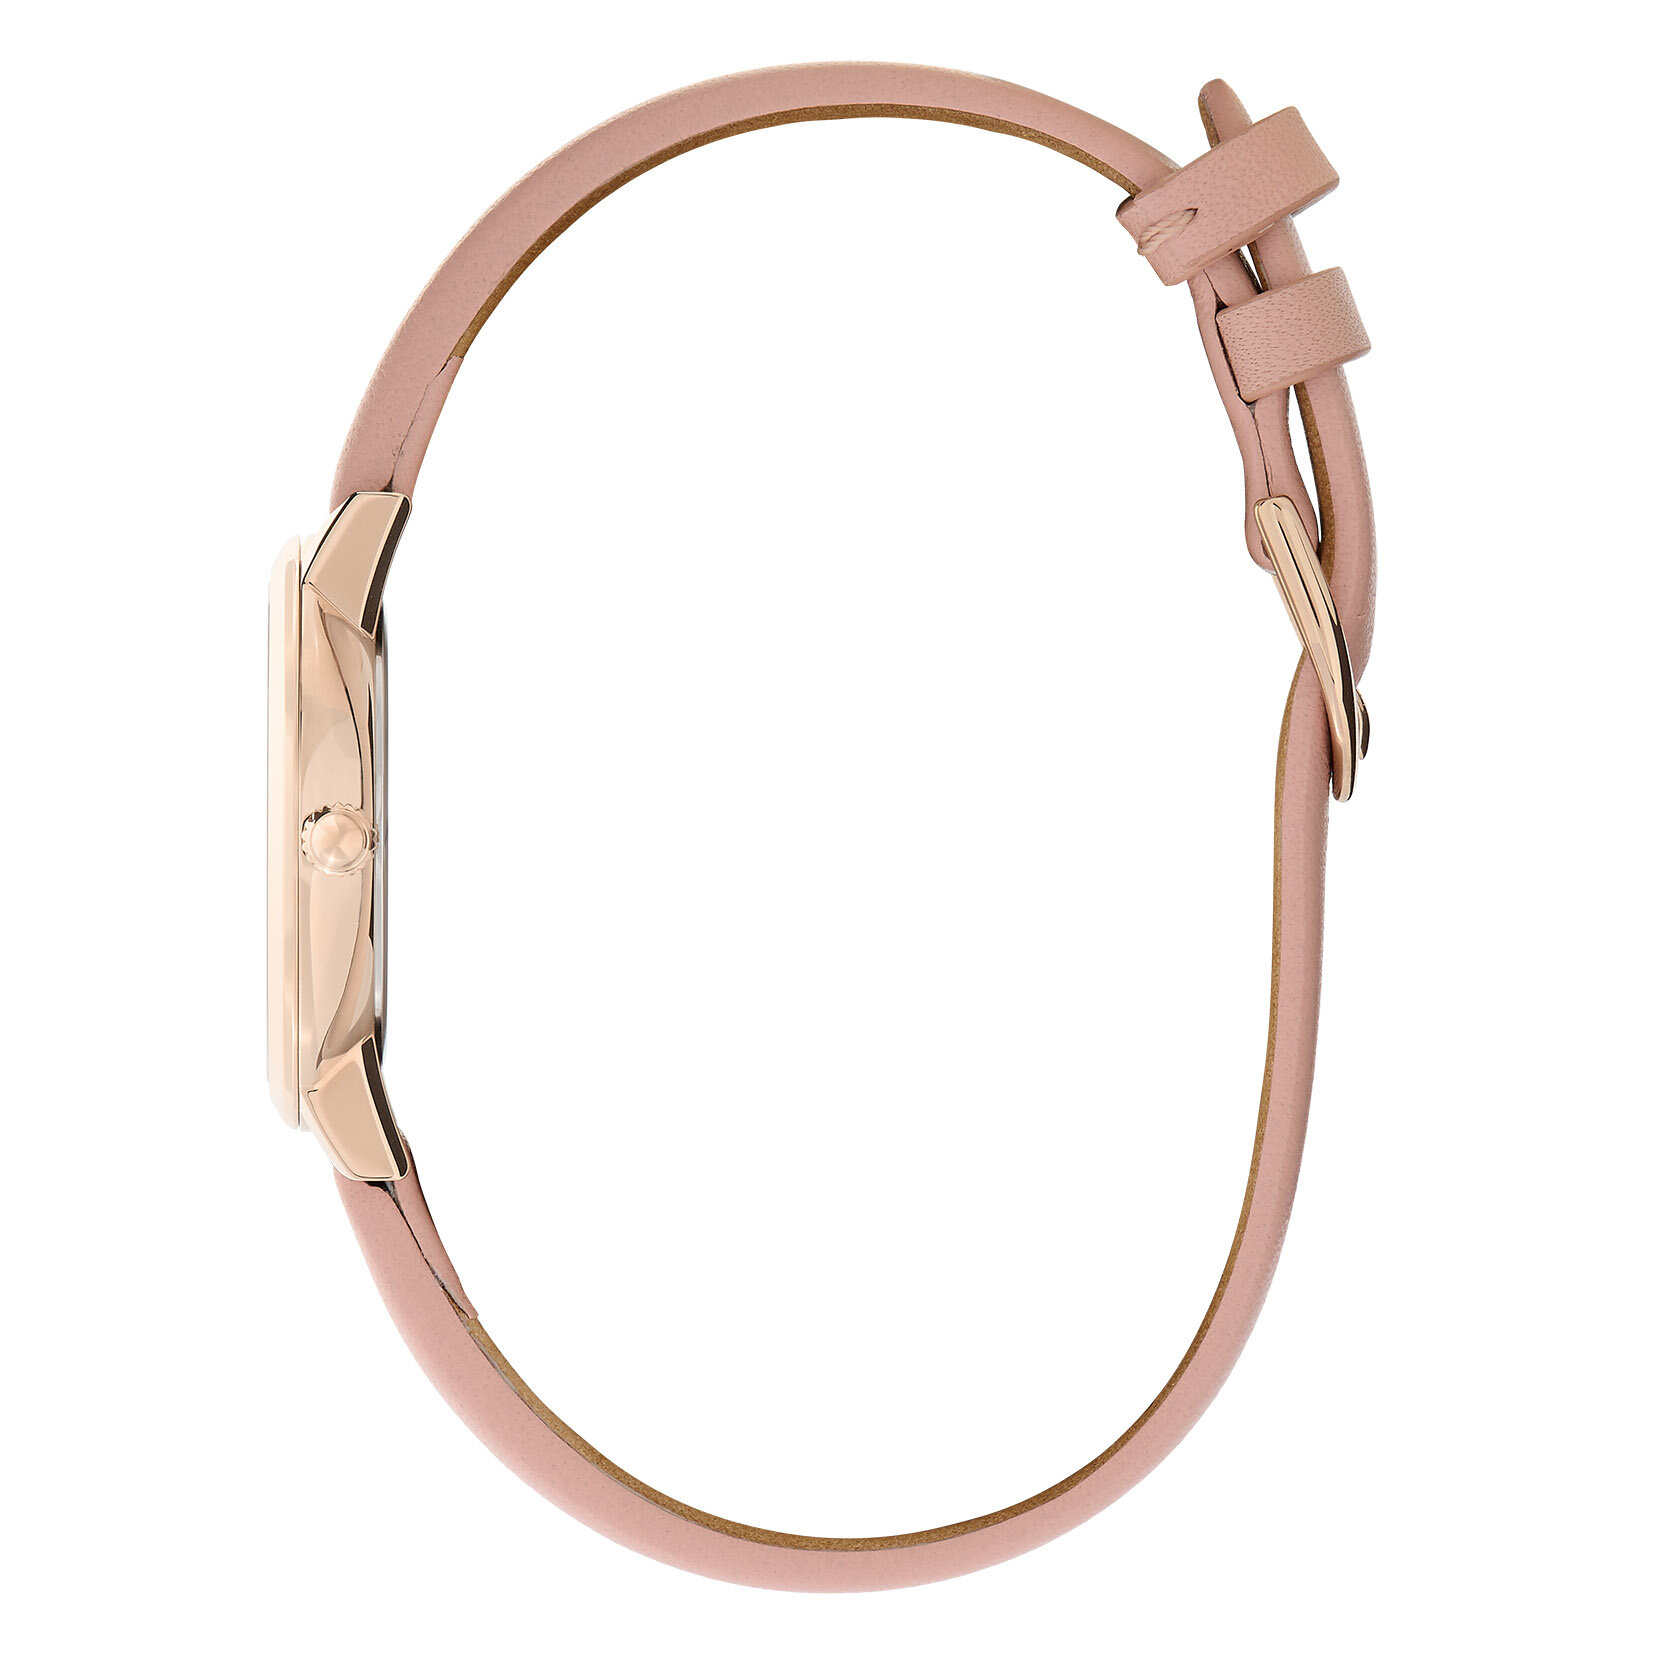 Montre Abeille ultra fine avec bracelet en cuir Or rose et Rose pastel 28 mm